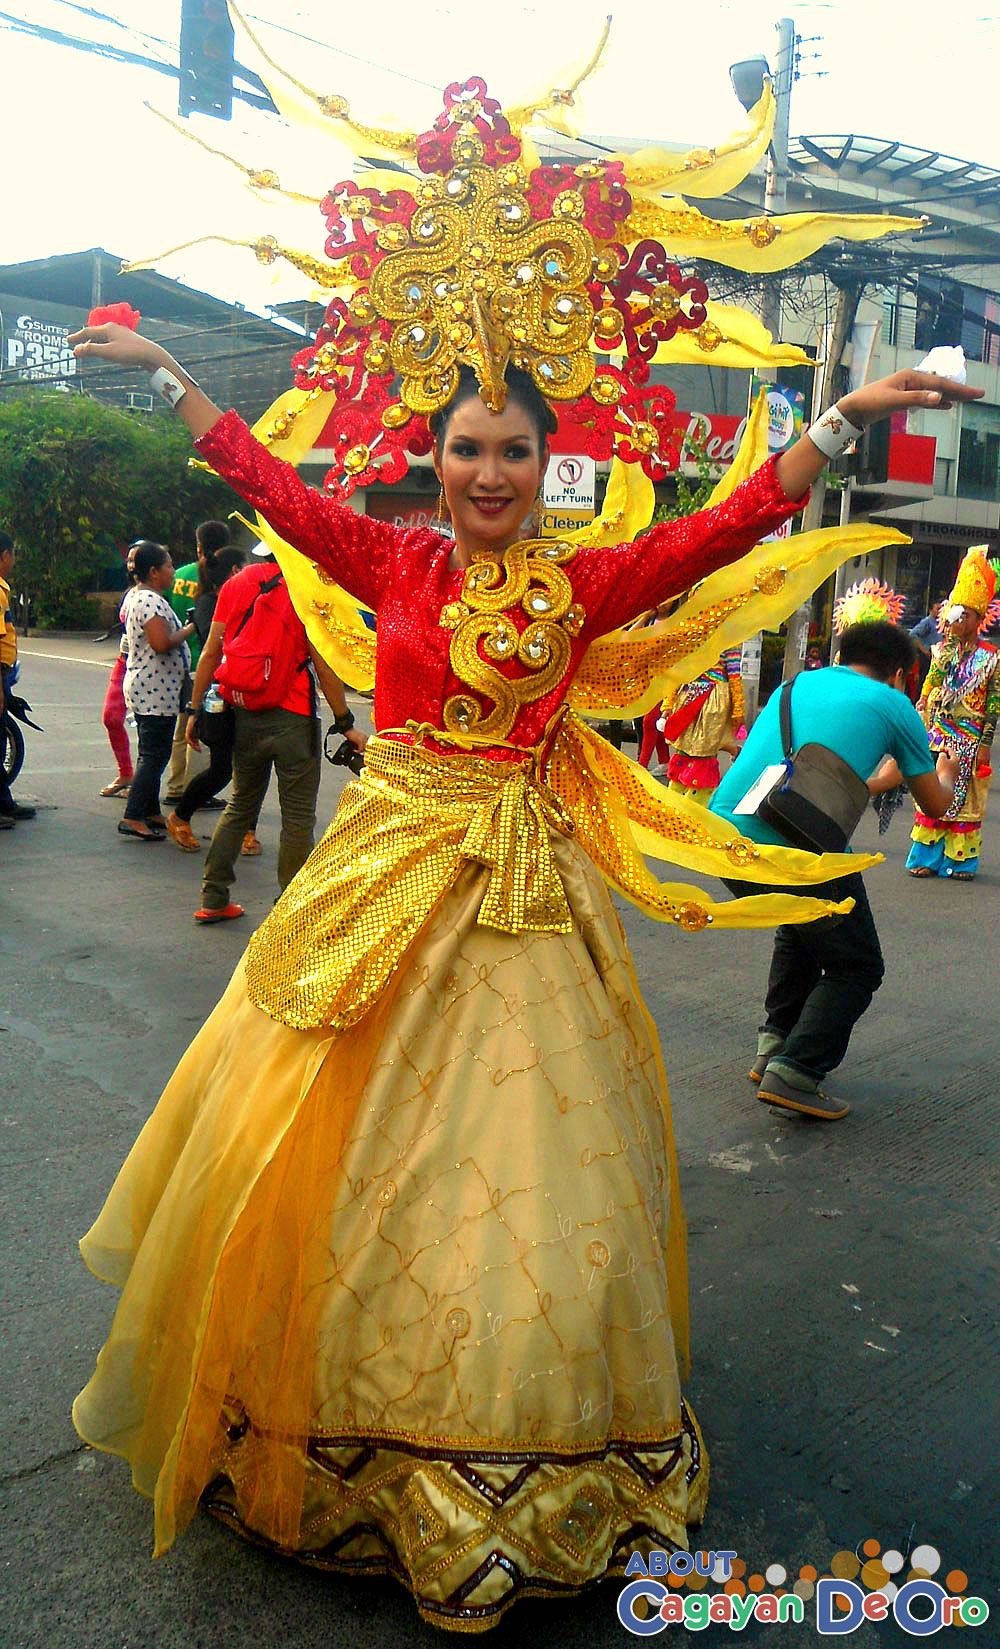 Macasandig National High School Carnival Queen - Cagayan de Oro Carnival Parade 2015